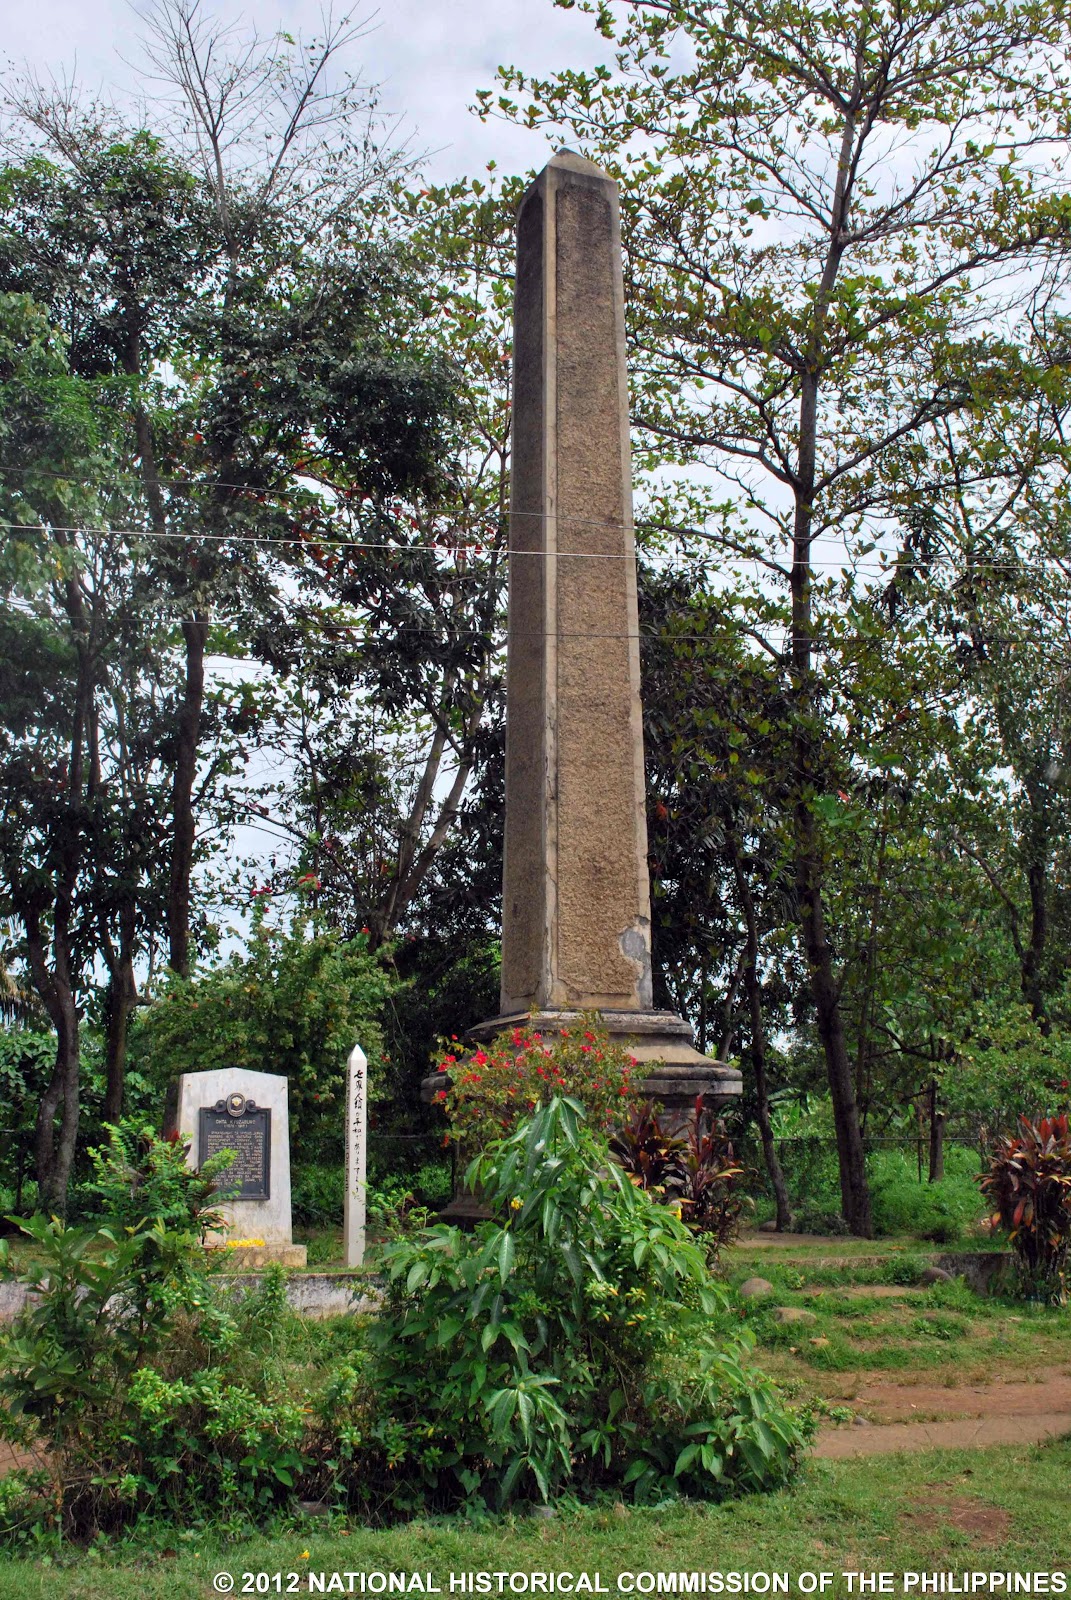 Ohta memorial. A memorial obelisk built in honor of Ohta Kyosaburu who invoked the Public Land Act #926 of 1903 (Mintal Elem. Sch.)